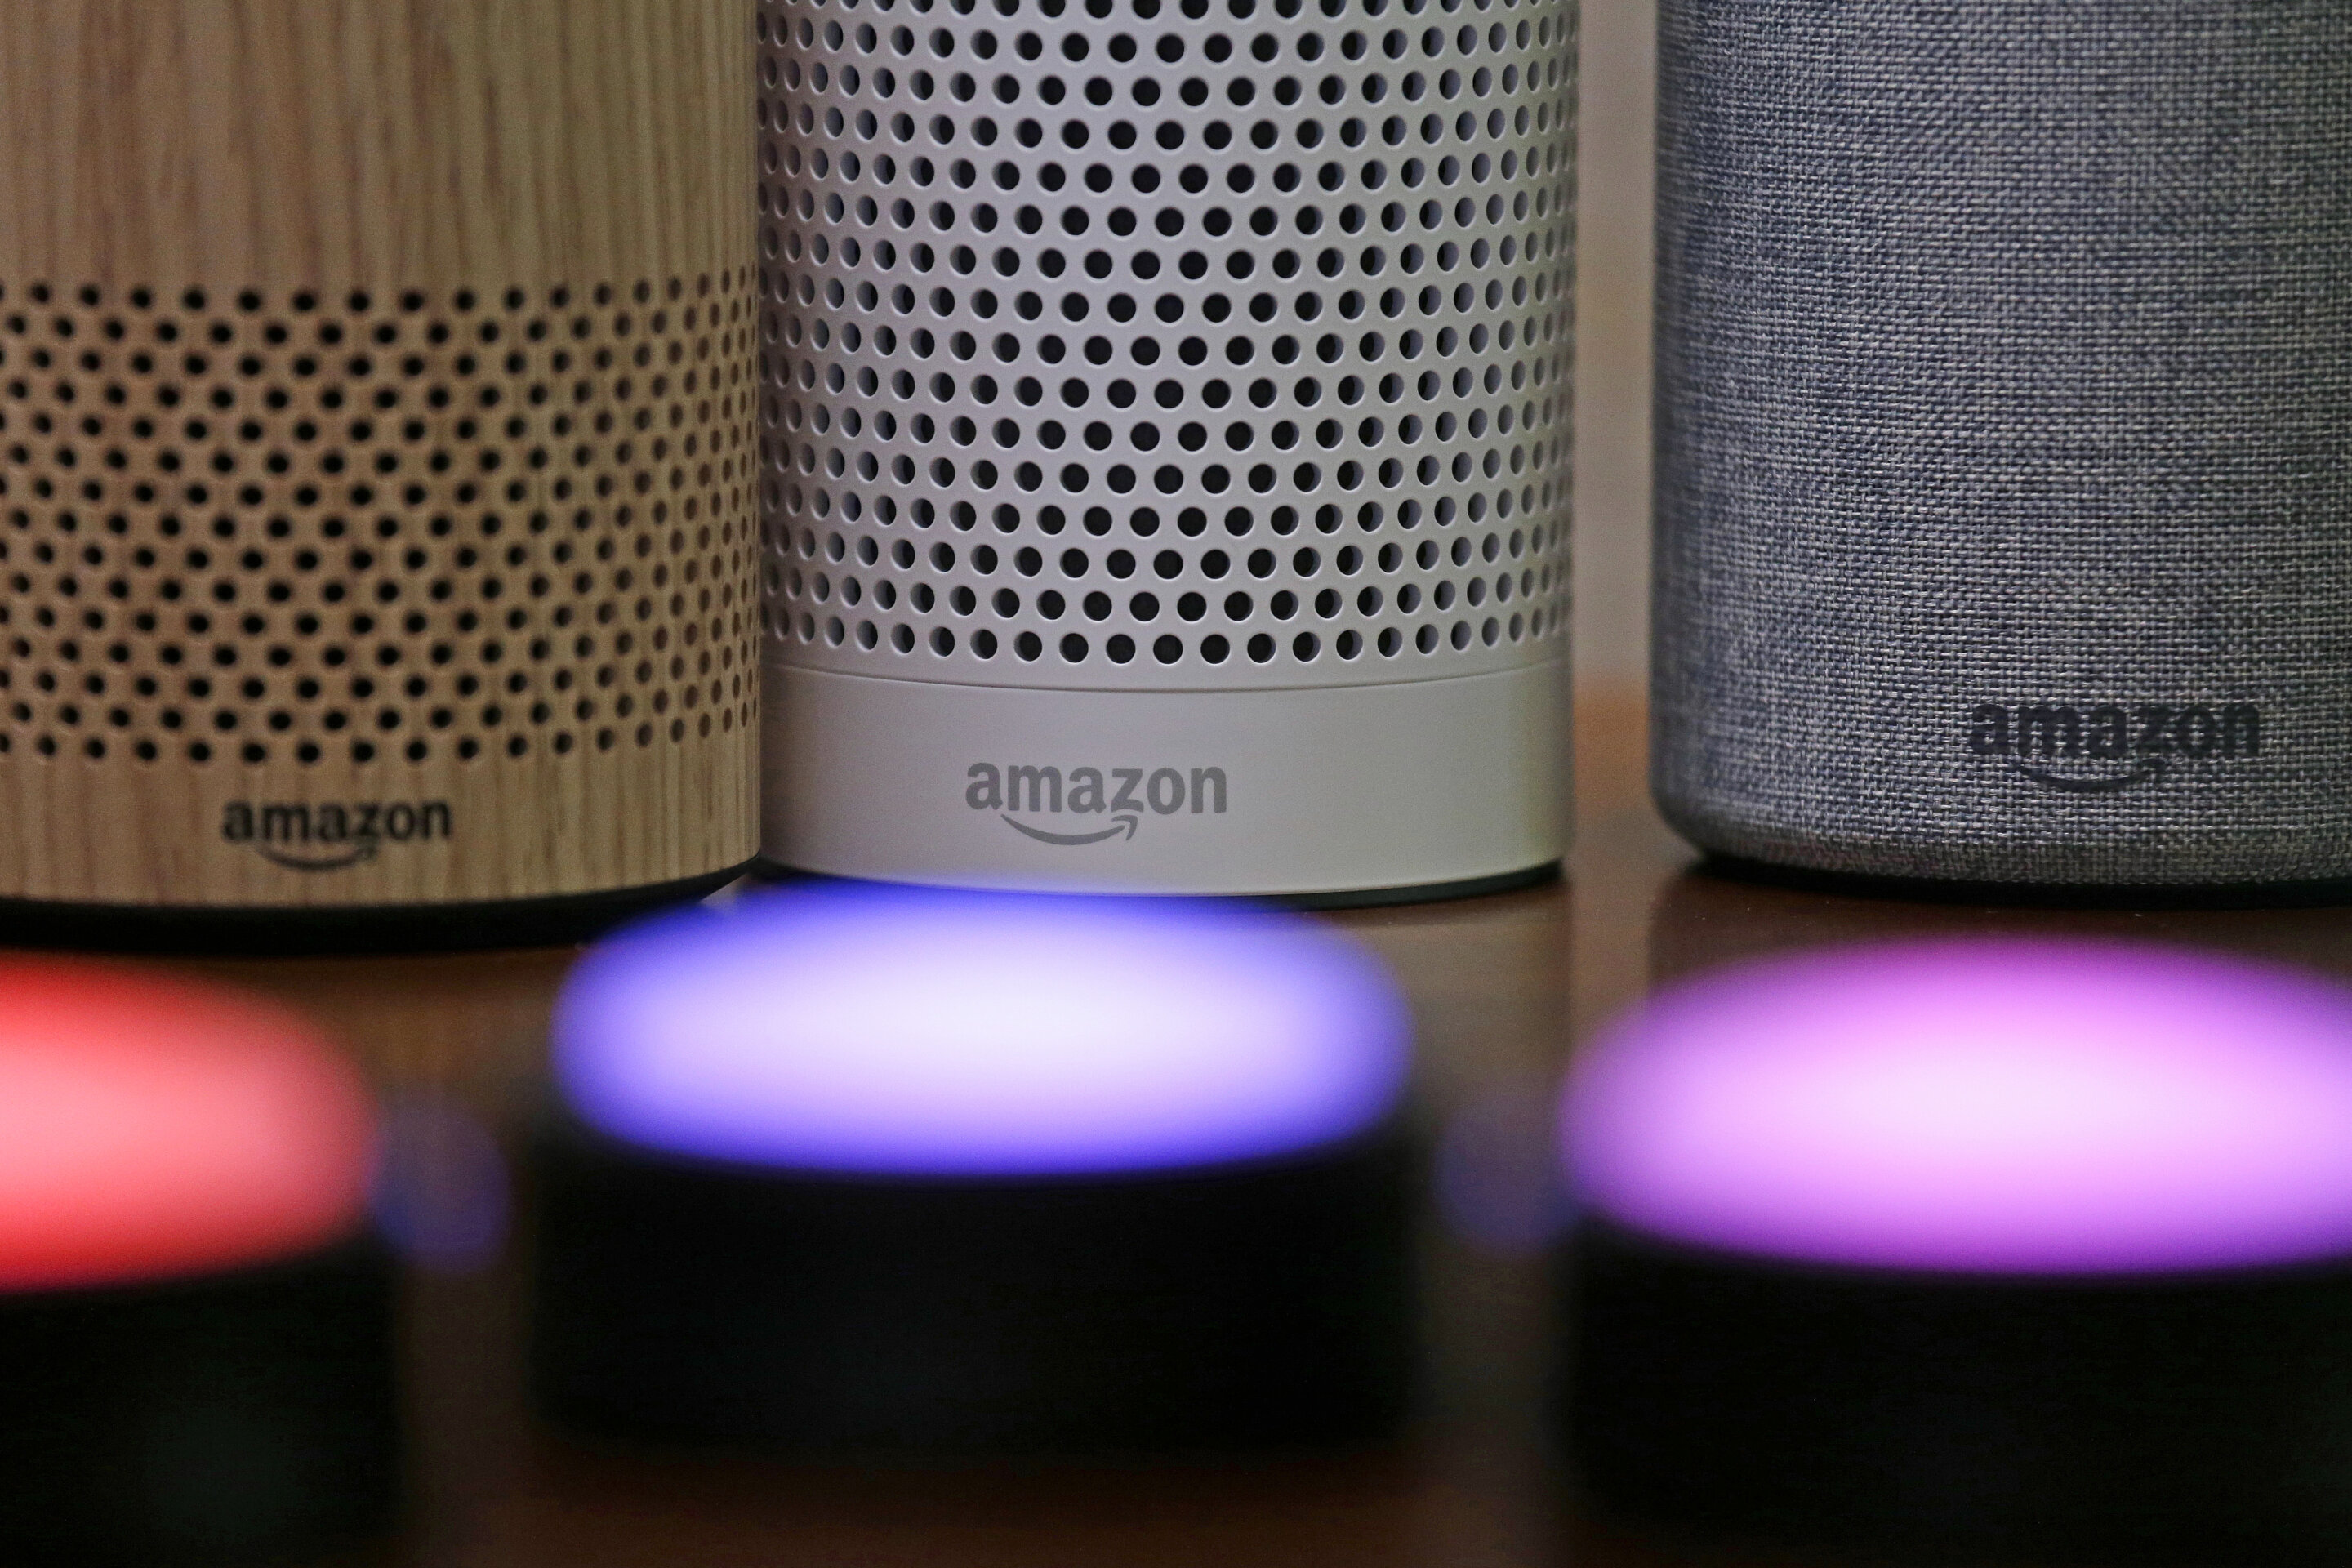 Amazon's Alexa could soon mimic voice of dead relatives